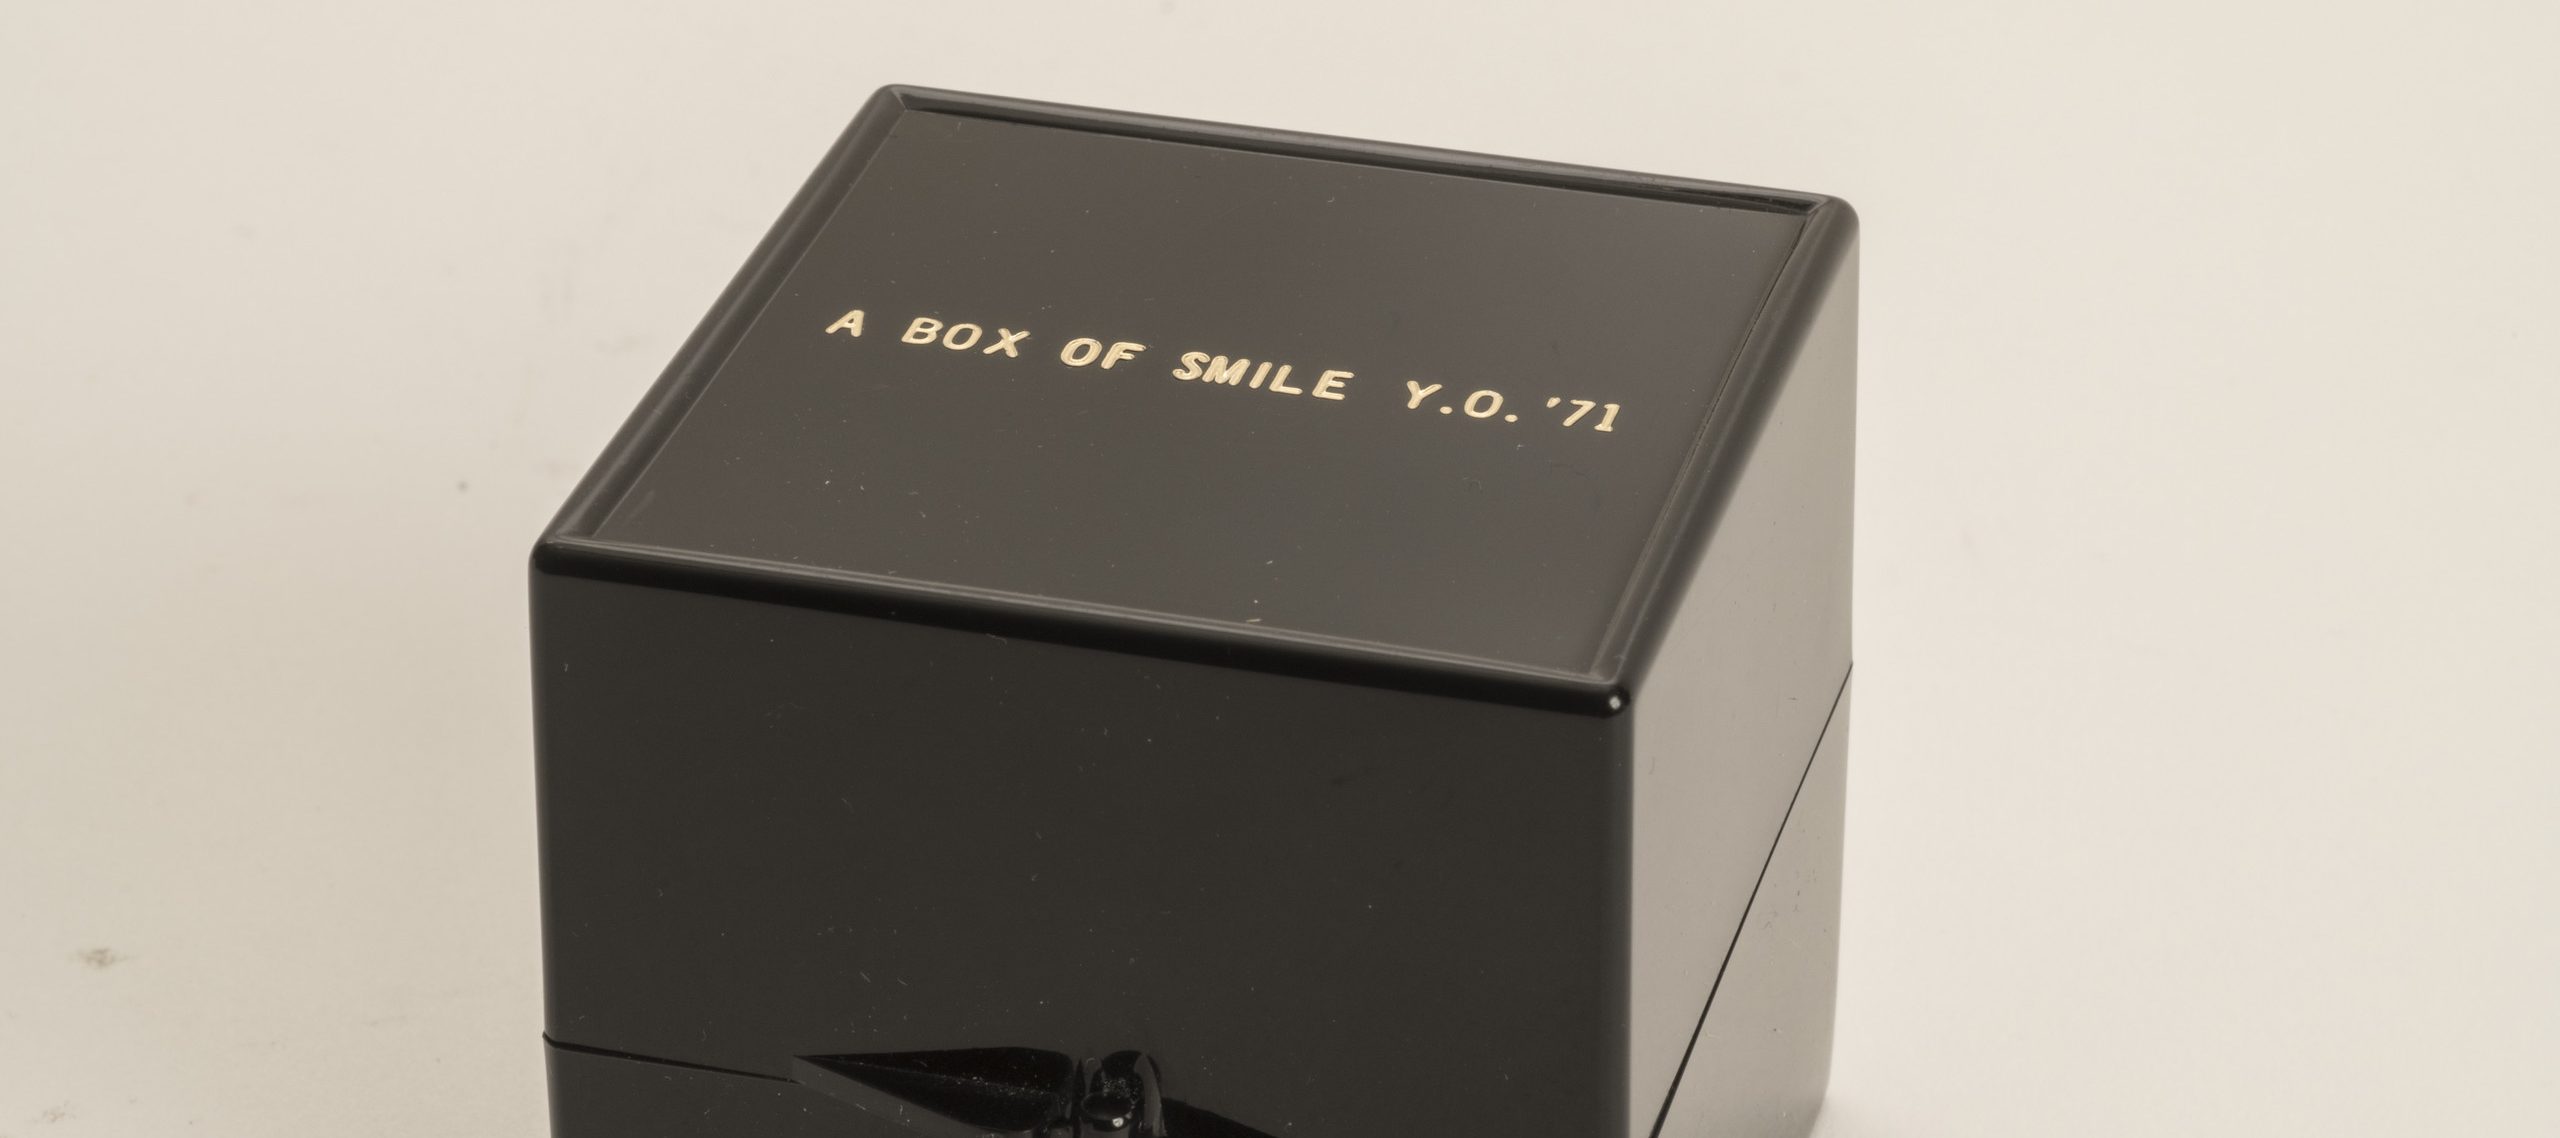 A small black square box that has 